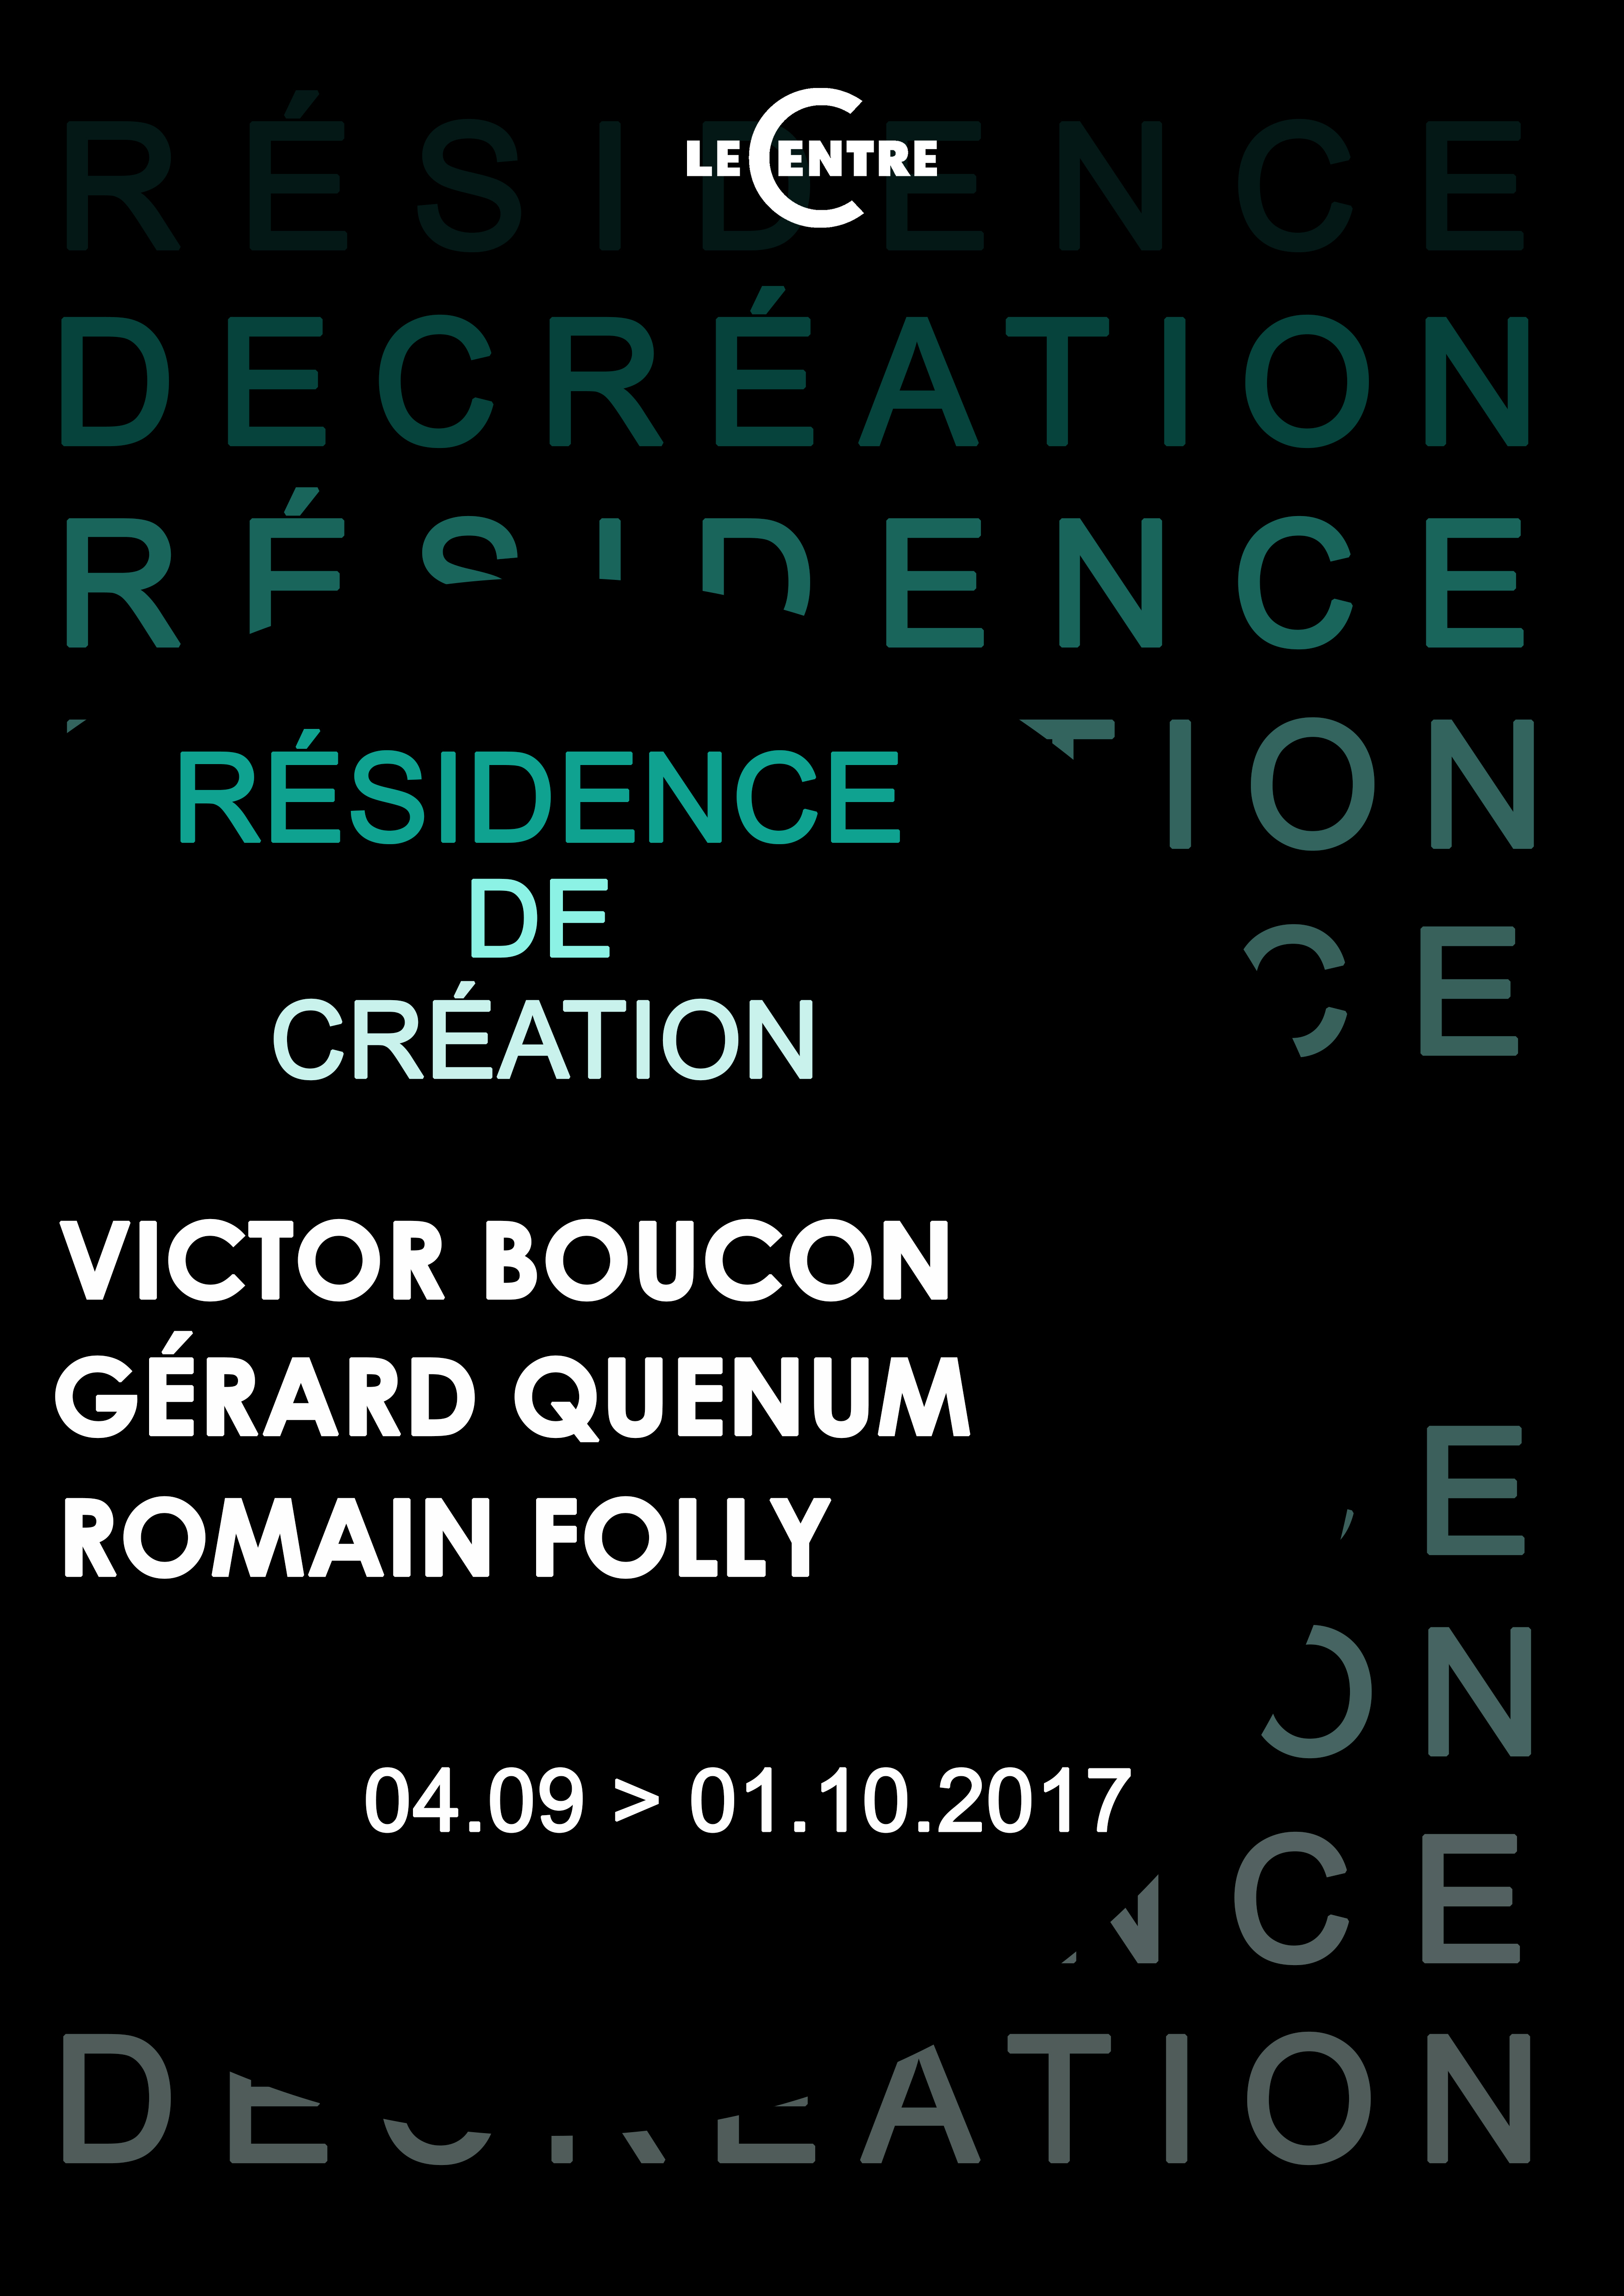 Victor Boucon, Gérard Quenum & Vanessa Rosa